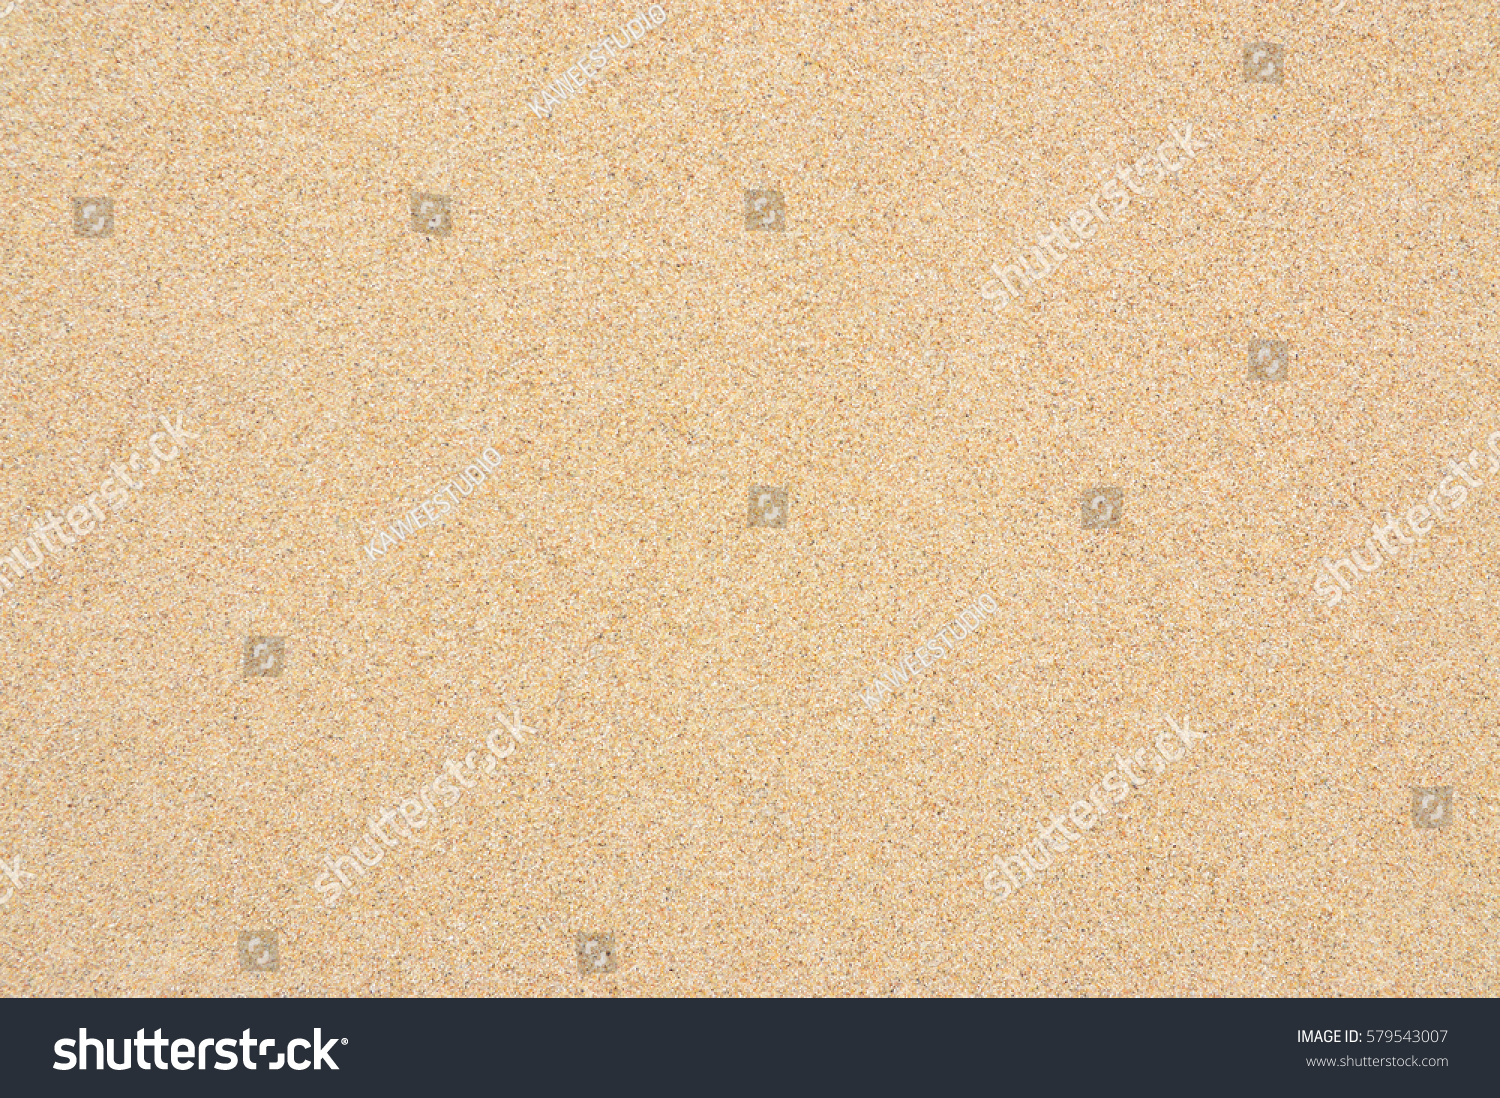 Sand texture. Sand background. Beach sand #579543007